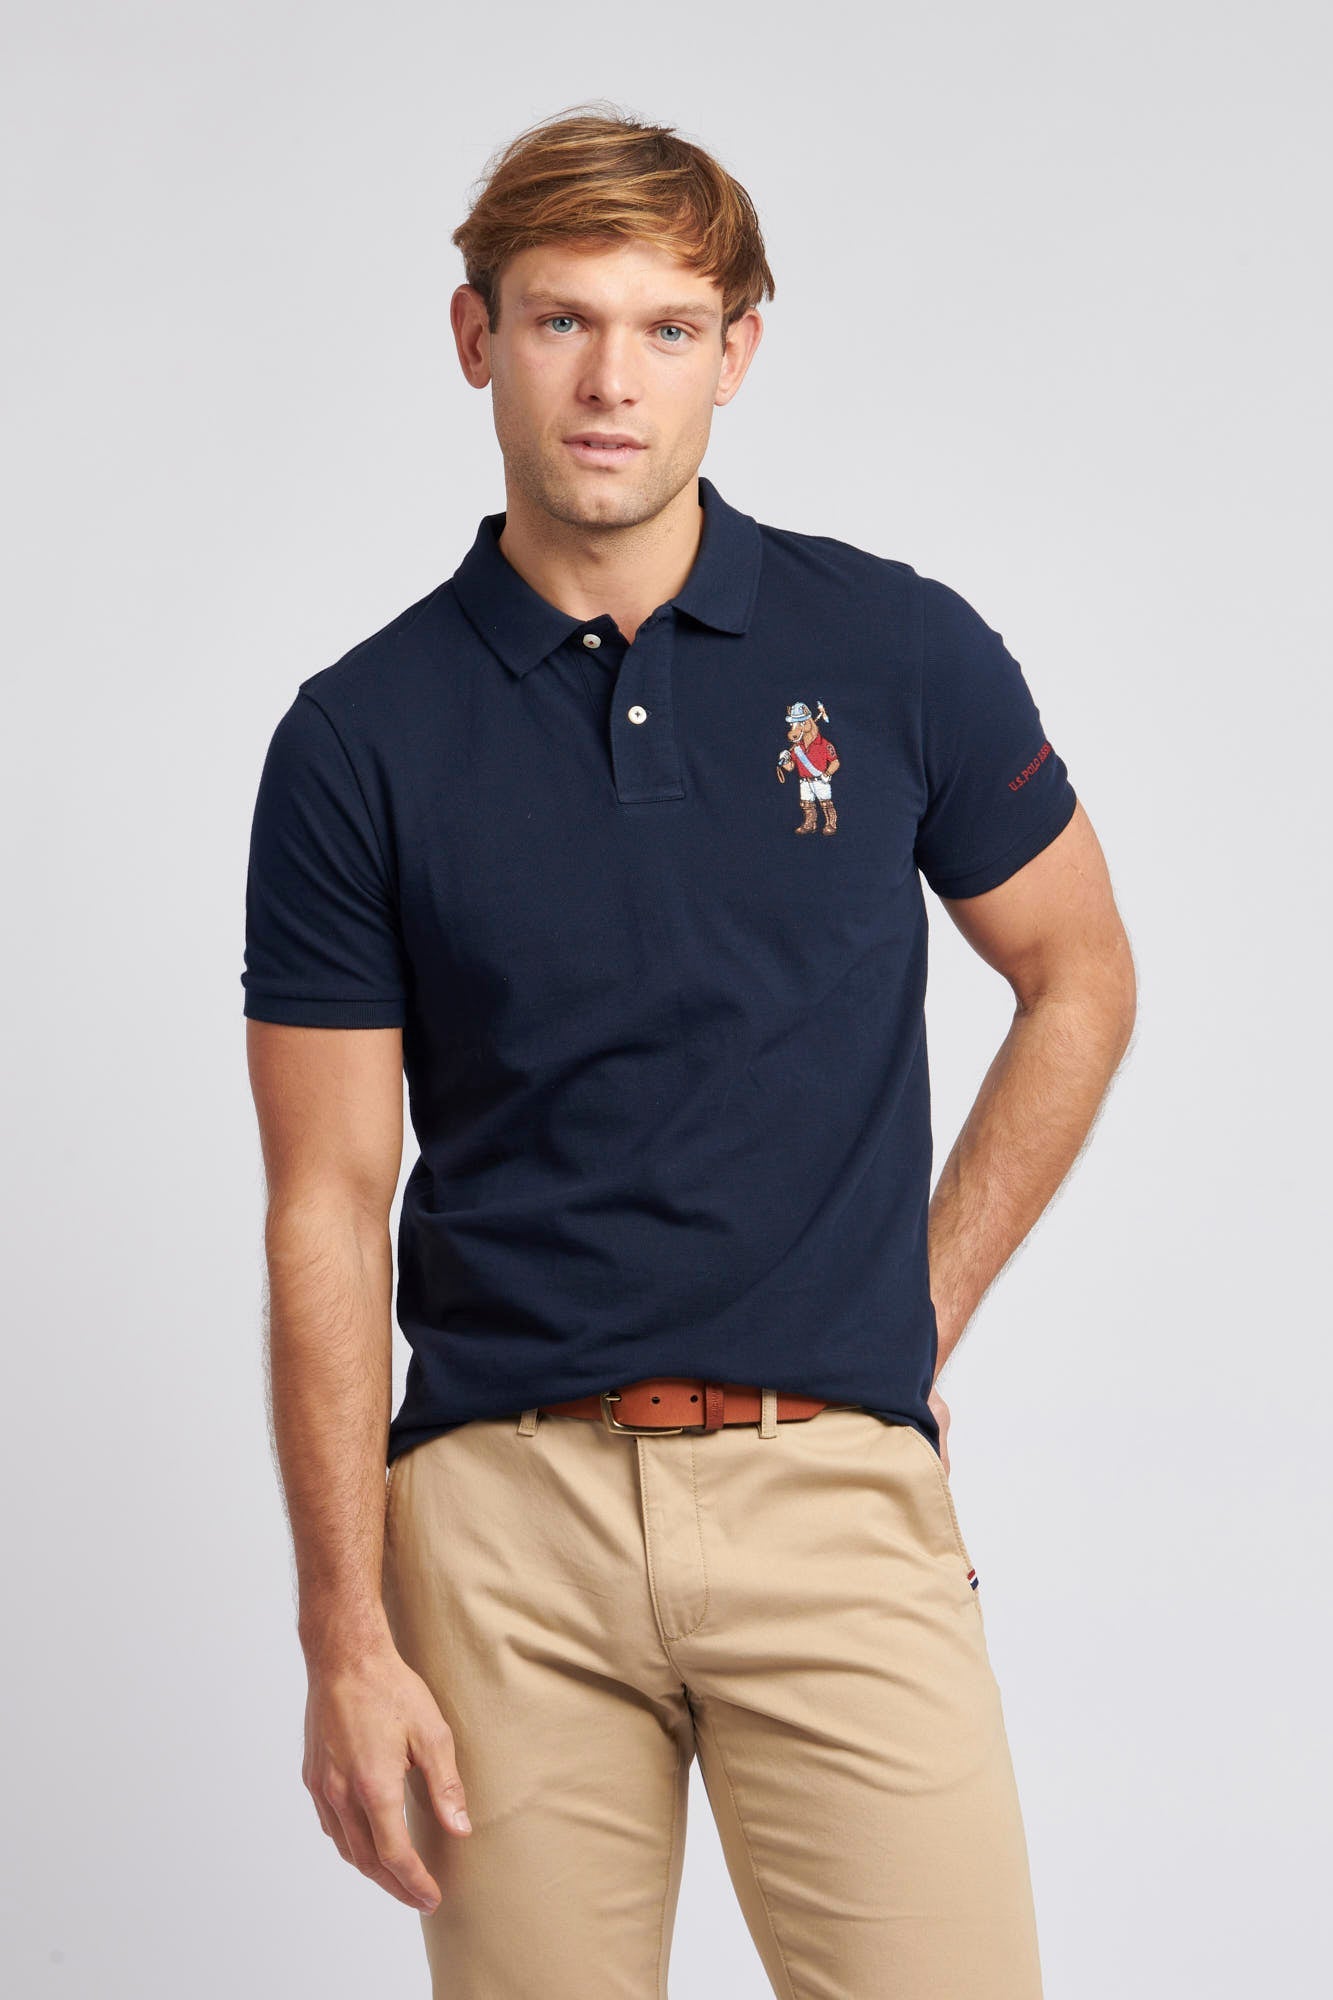 U.S. Polo Assn. Mens Chuck Polo Shirt in Dark Sapphire Navy